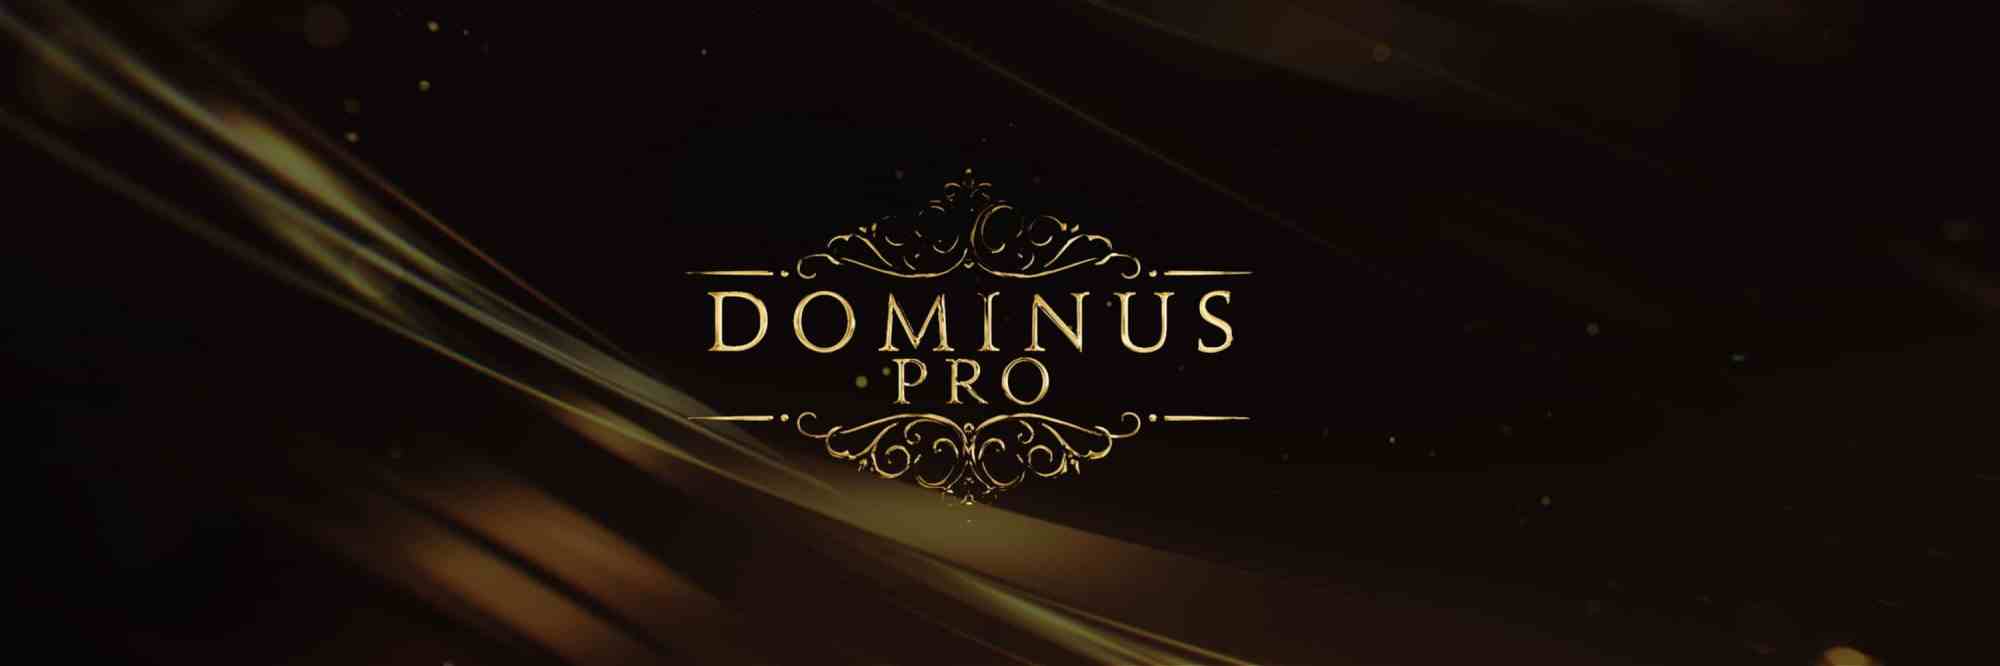 Dominus Choir Pro by FluffyAudio